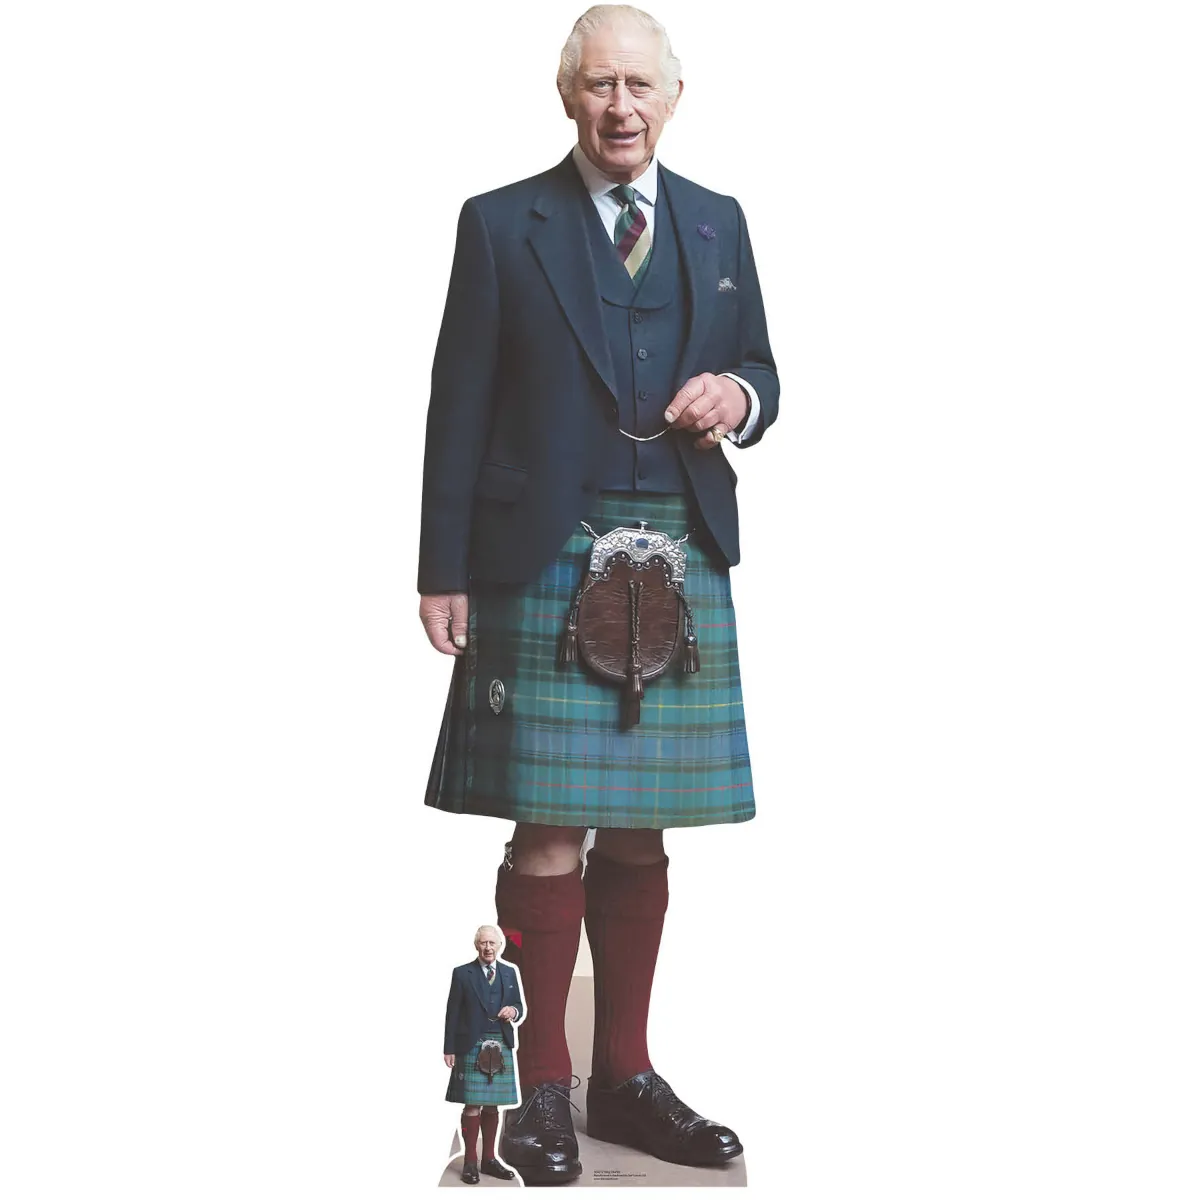 SC4212 King Charles III 'Wearing Kilt' (British Royal) Lifesize + Mini Cardboard Cutout Standee Front